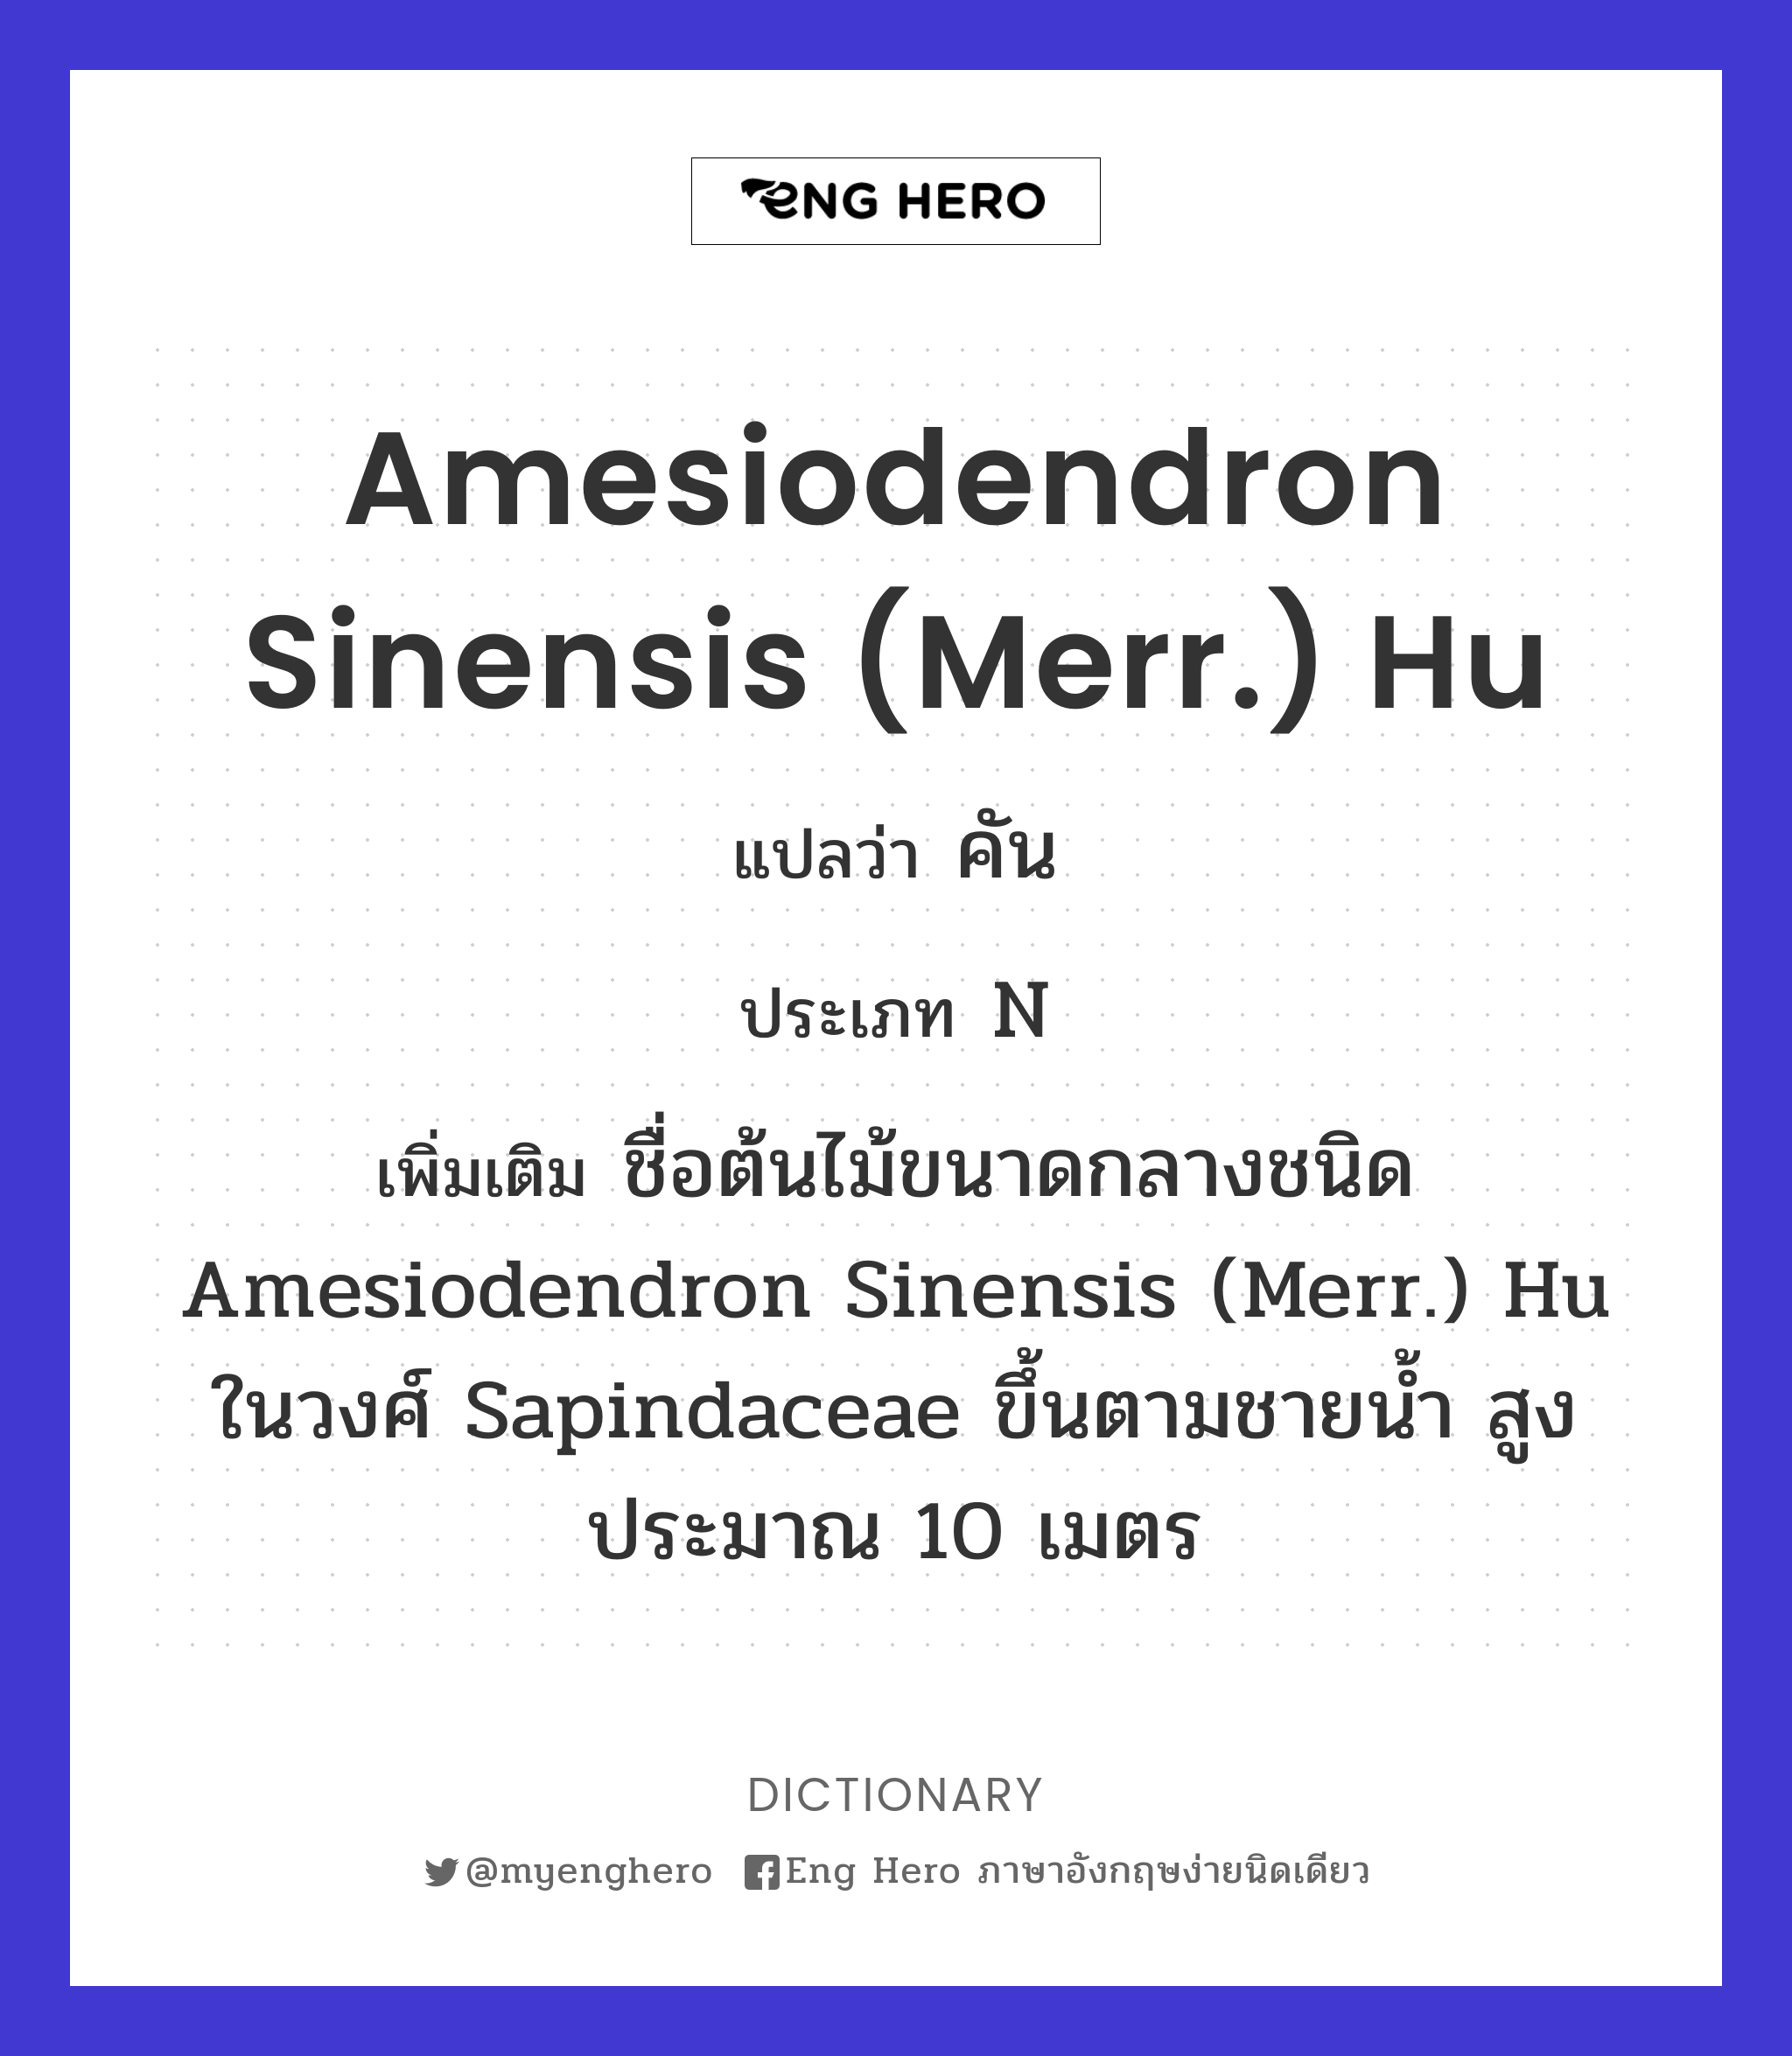 Amesiodendron sinensis (Merr.) Hu